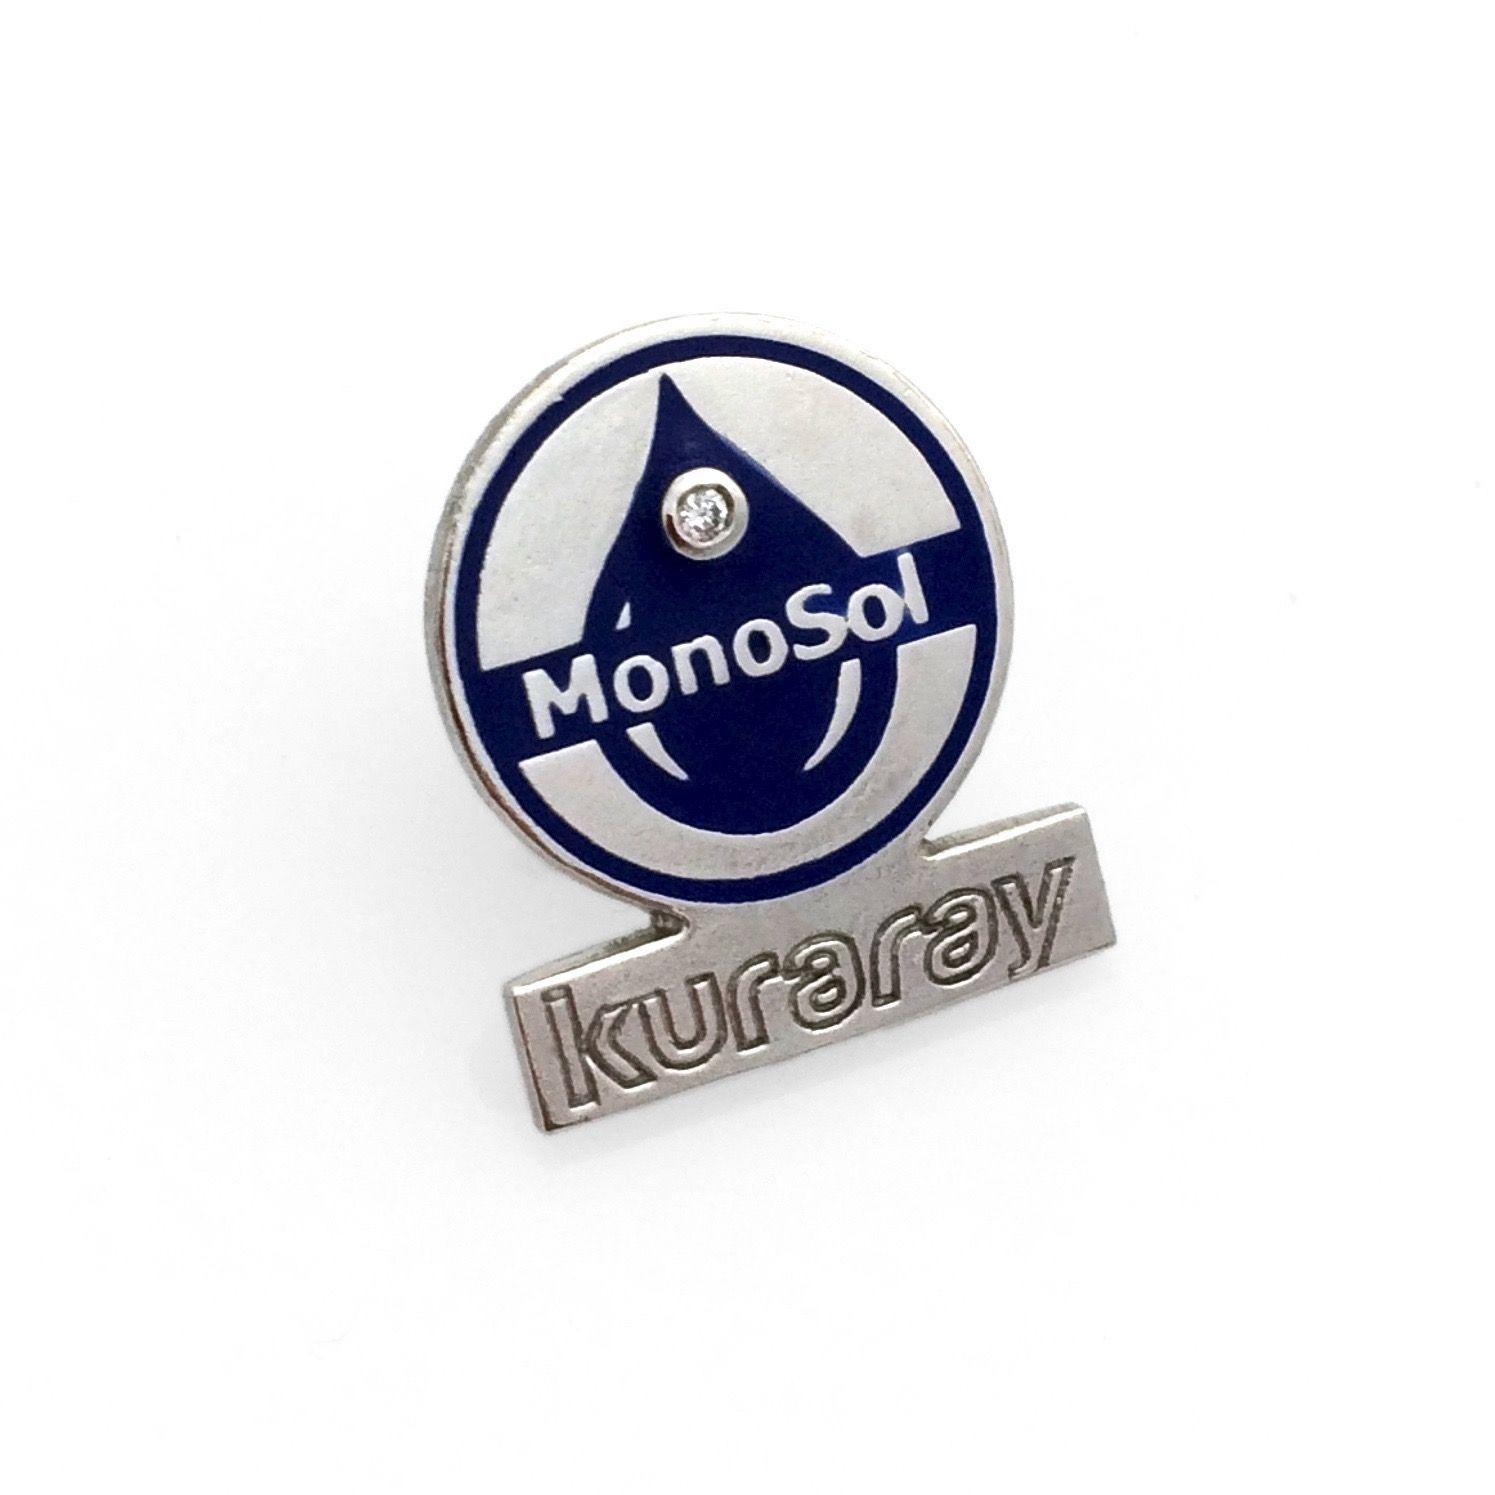 Pin Company Logo - Company Logo Lapel Pins Related Keywords & Suggestions